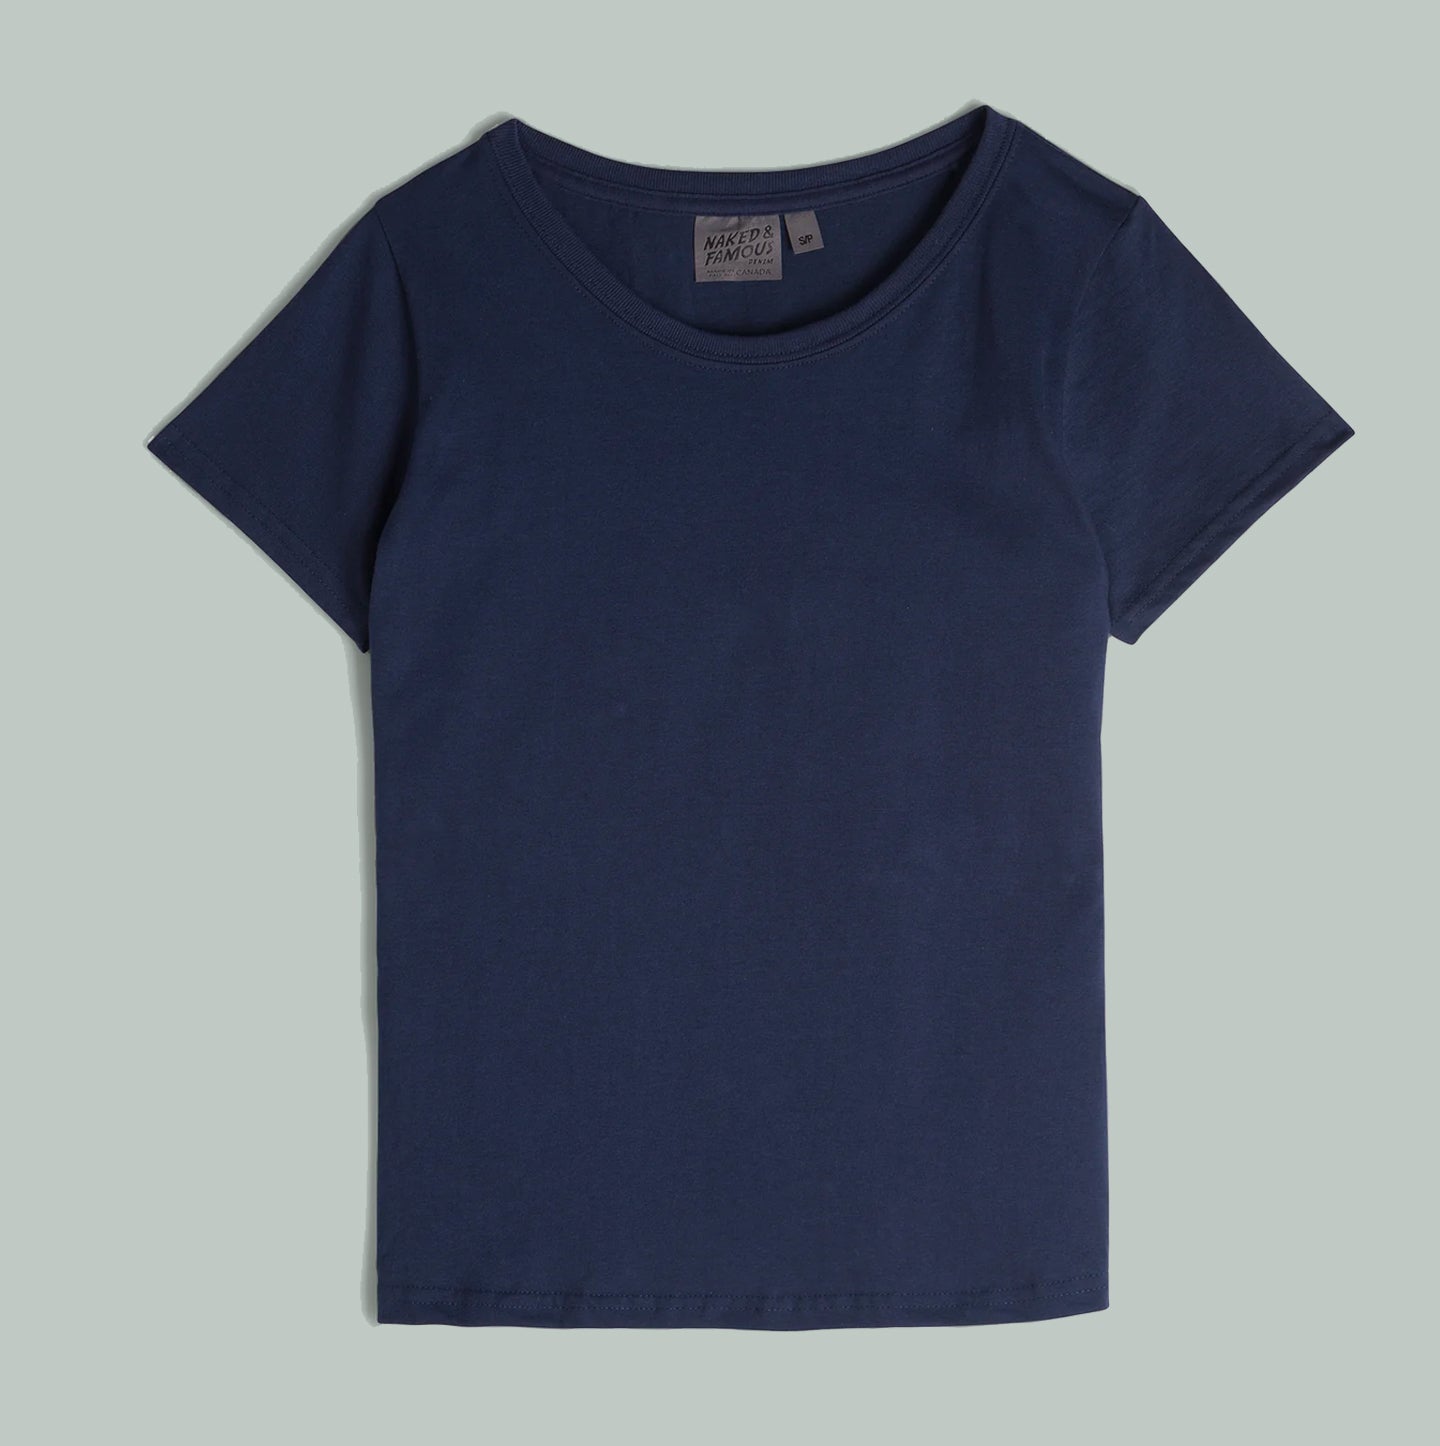 Women's Circular Knit T-Shirt - Ringspun Cotton - Navy